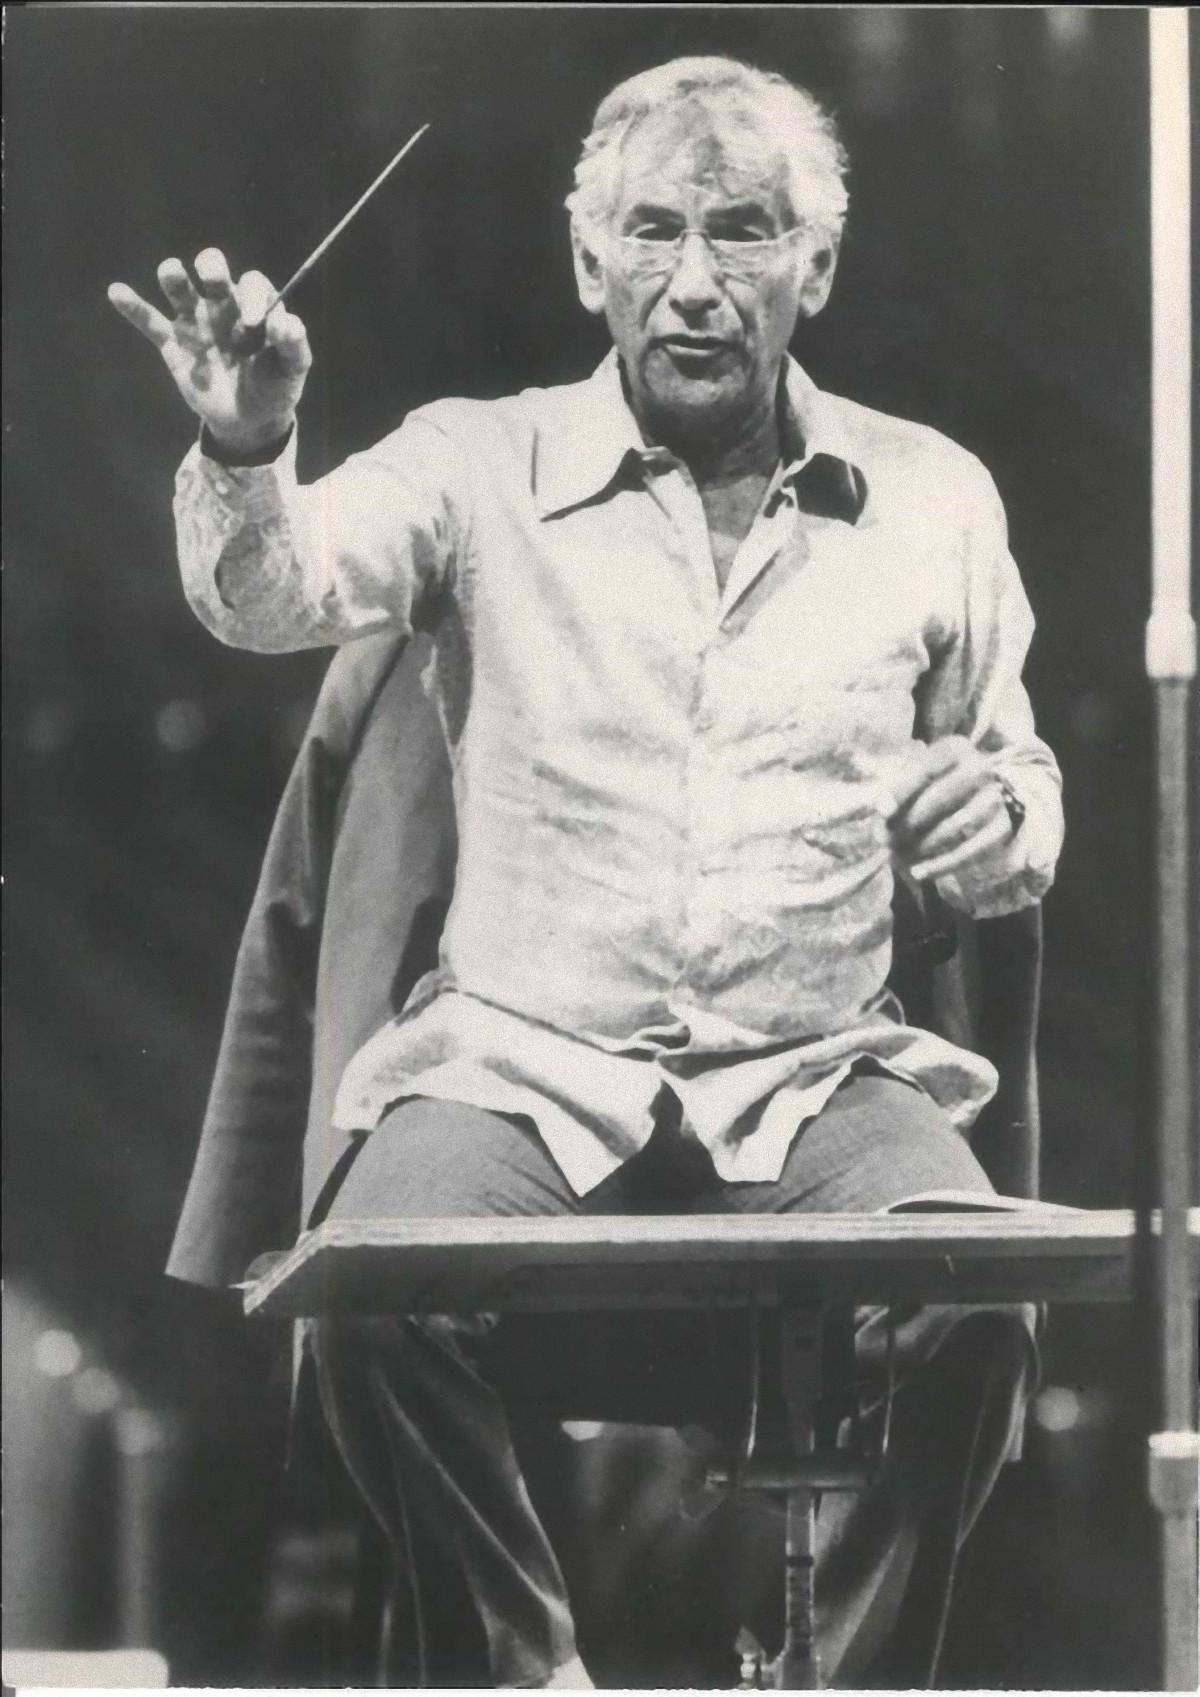 Unknown Figurative Photograph - Leonard Bernstein Conducting - Vintage B/W Photograph - 1970s